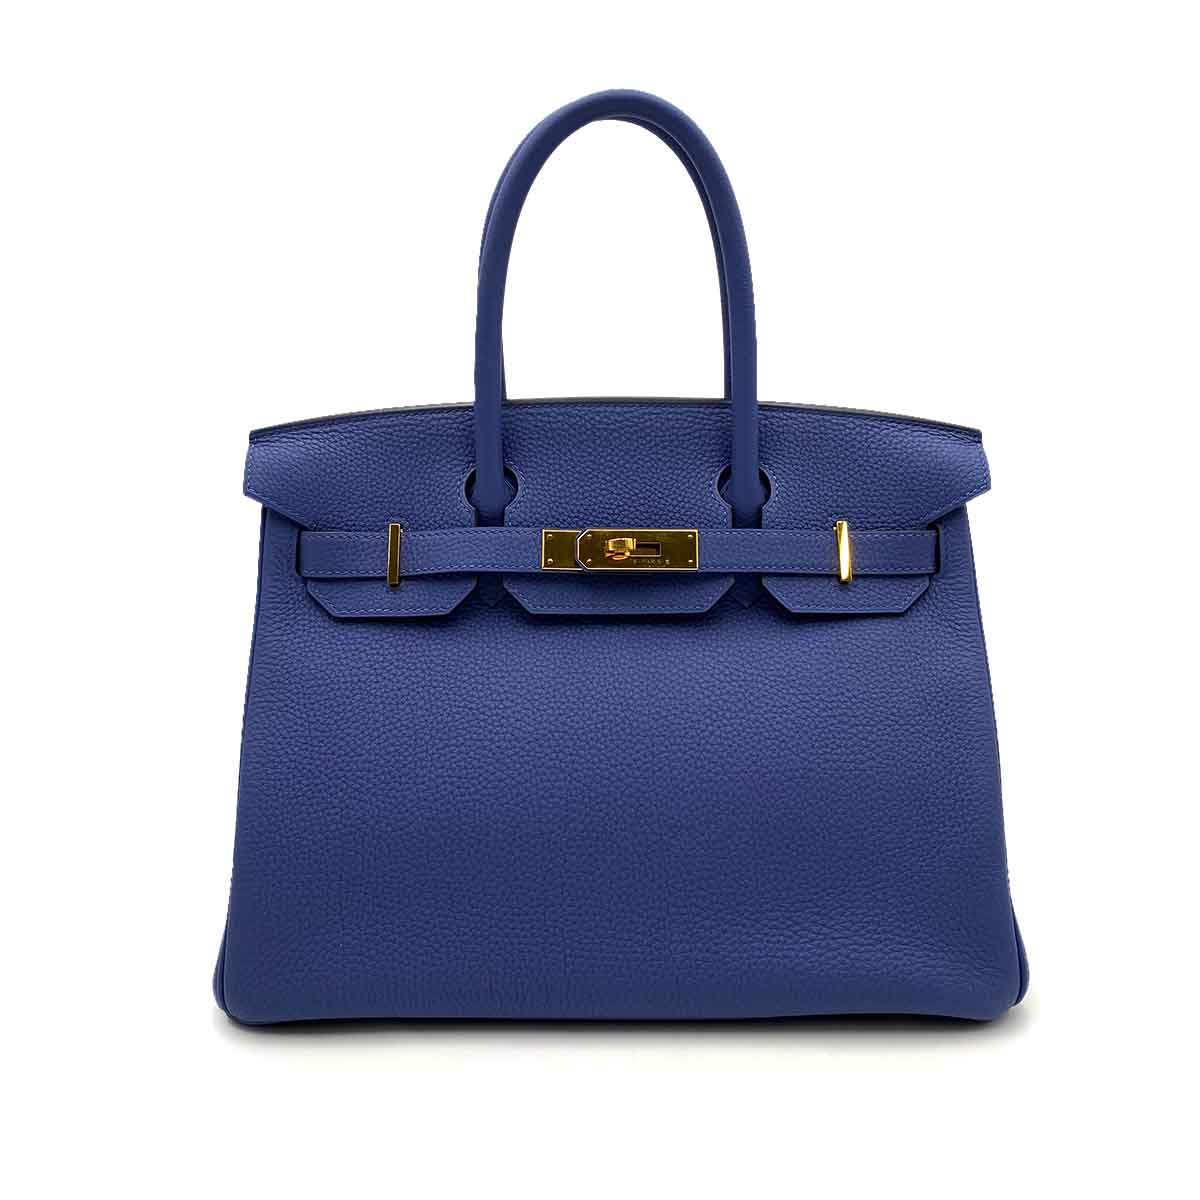 Hermès HERMES BIRKIN 30 TOGO BLUE BRIGHTON HAND BAG C GHW 90230880